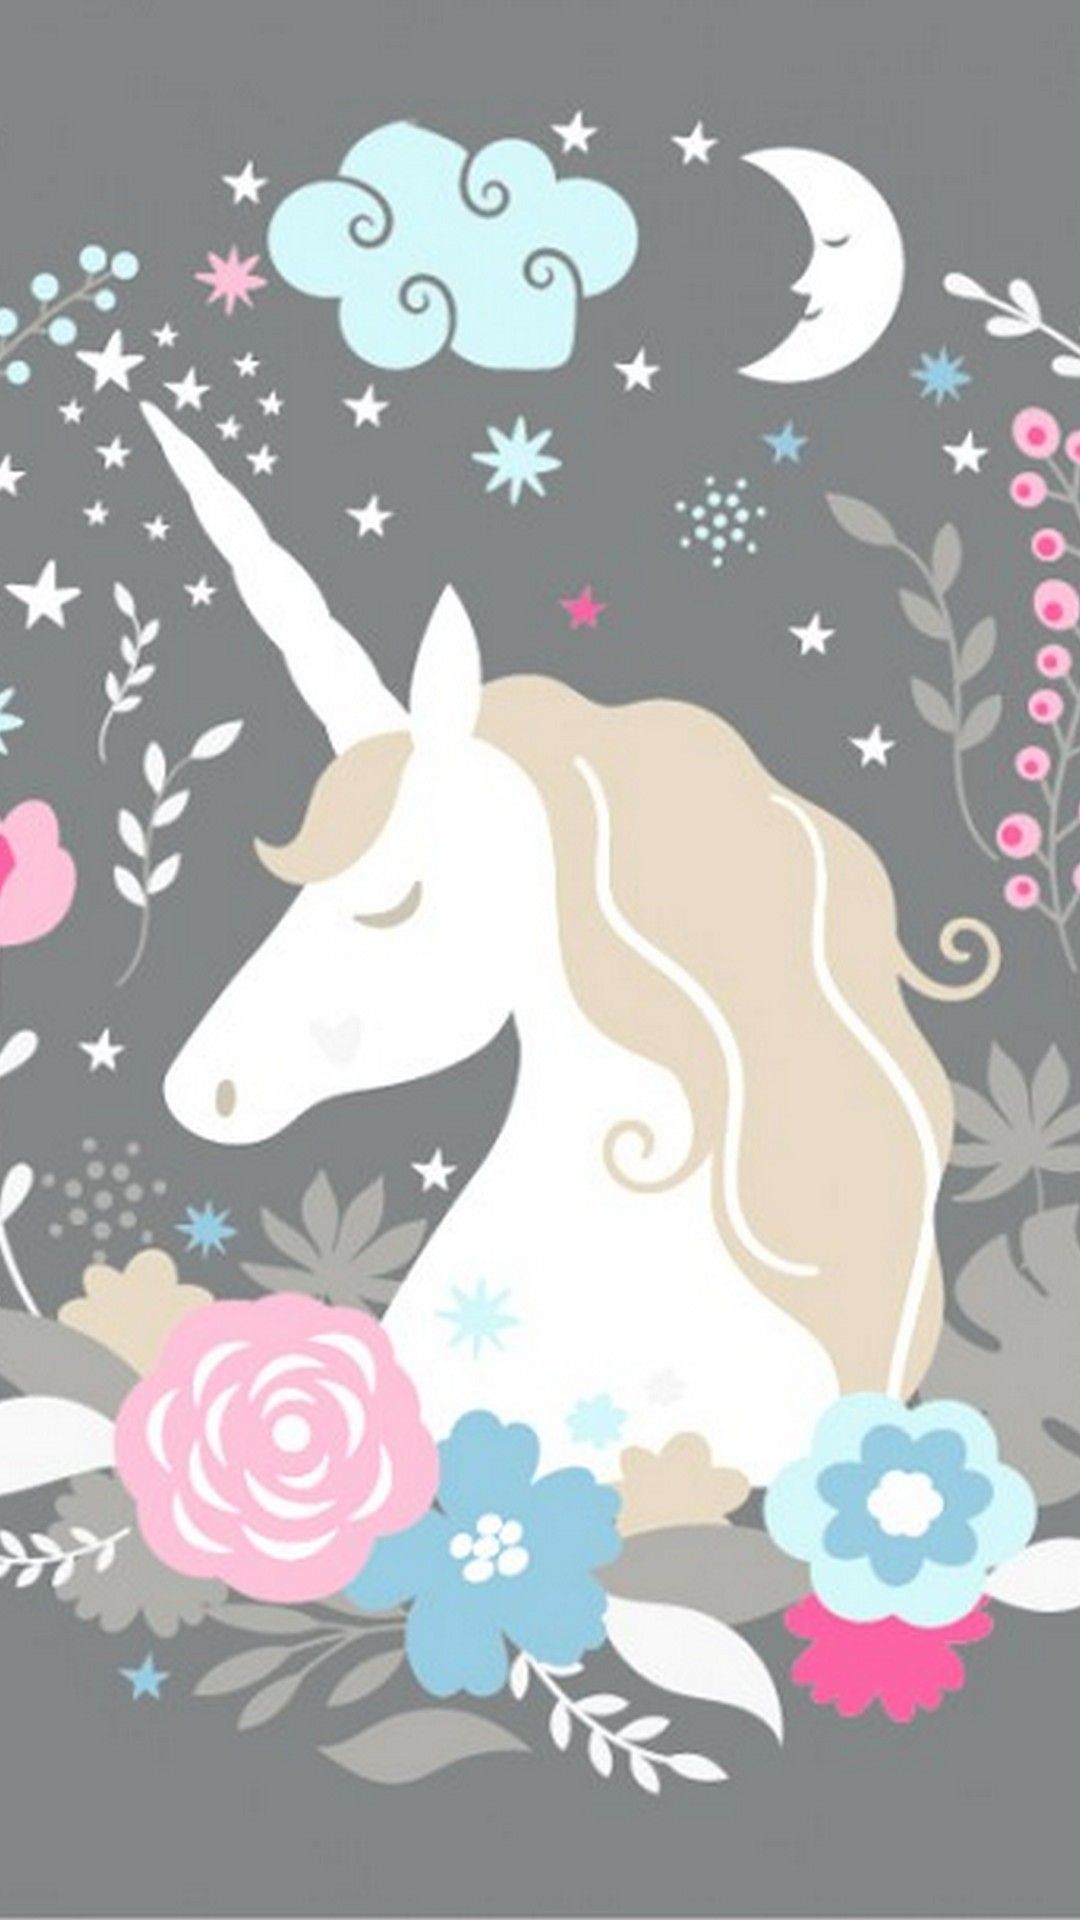 Cute Girly Unicorn iPhone 7 Wallpaper .3Diphonewallpaper.com